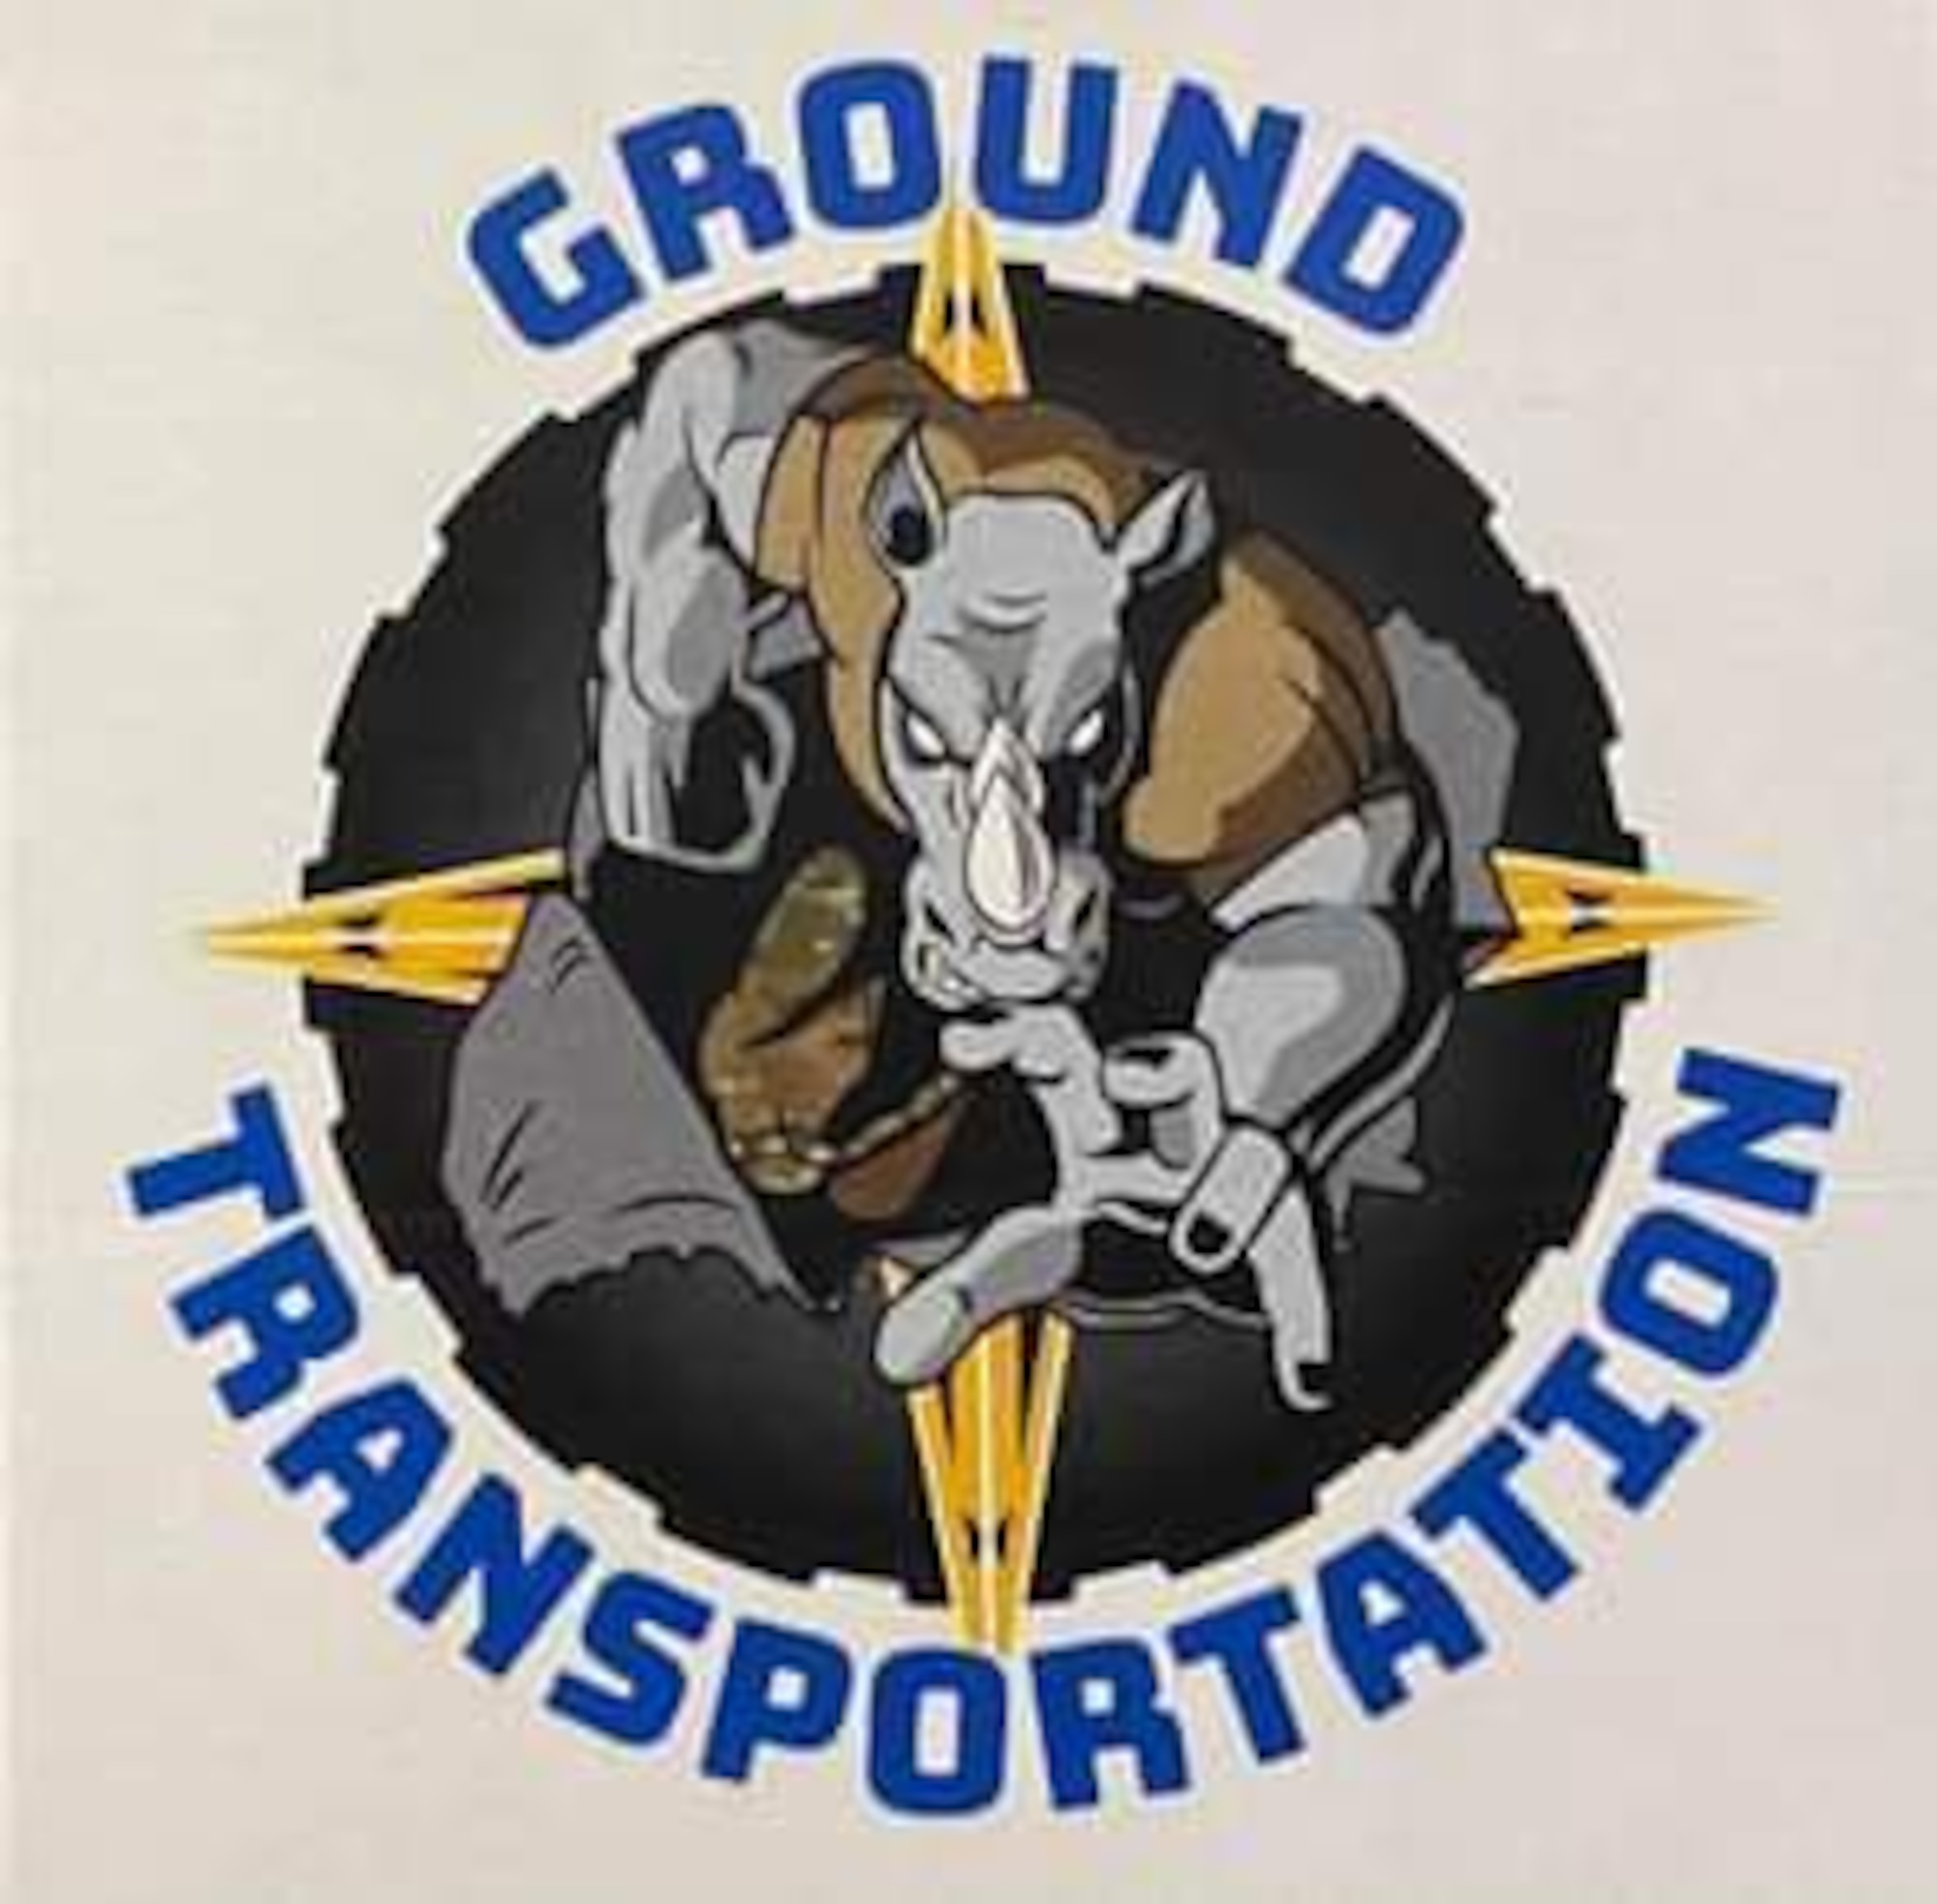 Ground Transportation rhinoceros logo